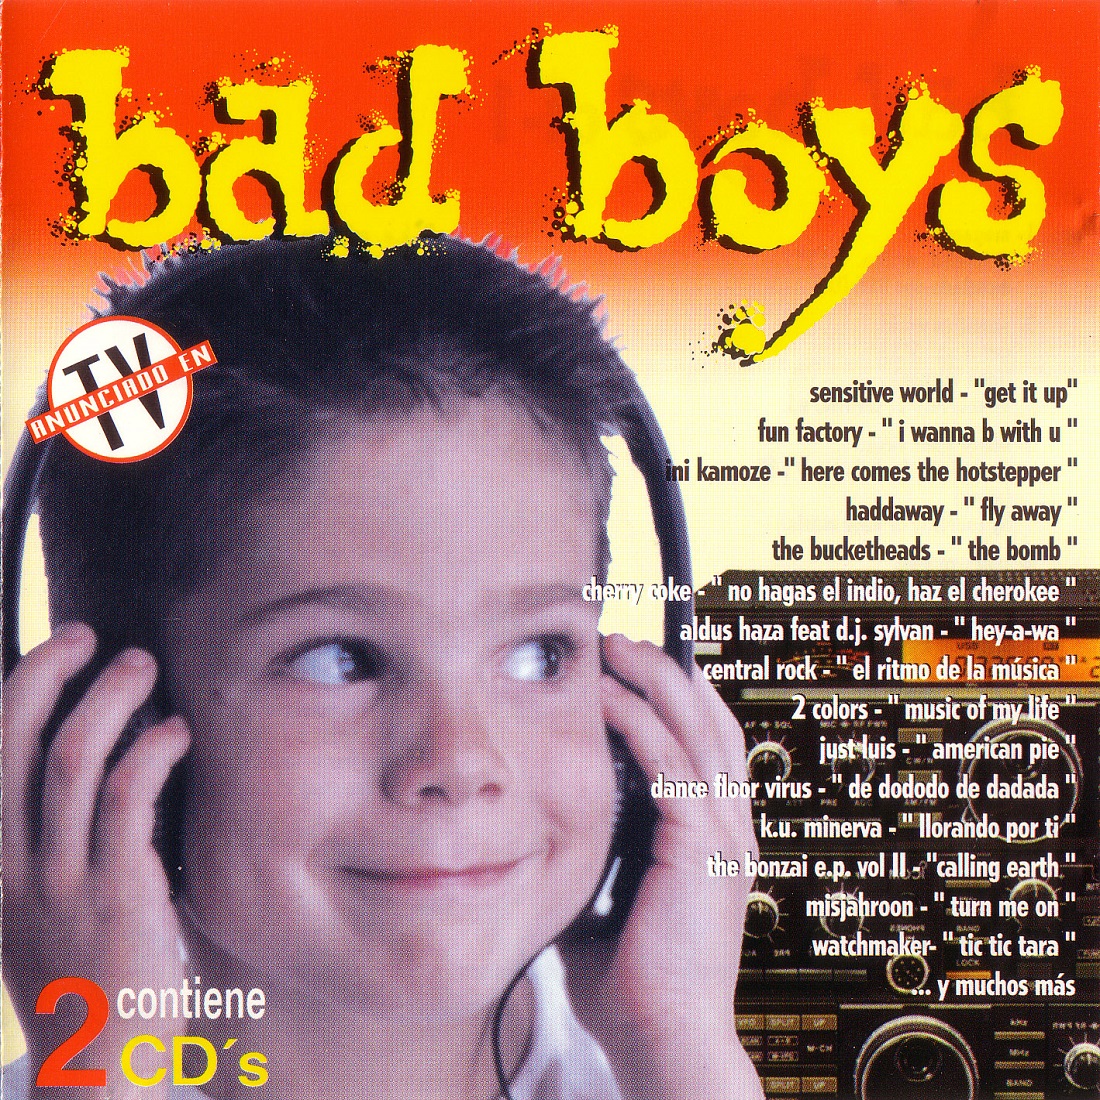 Boys мп3. CD boy. World-a-Music ini Kamoze. Bad boy records. Aldus Haza - Hey-a-WA.